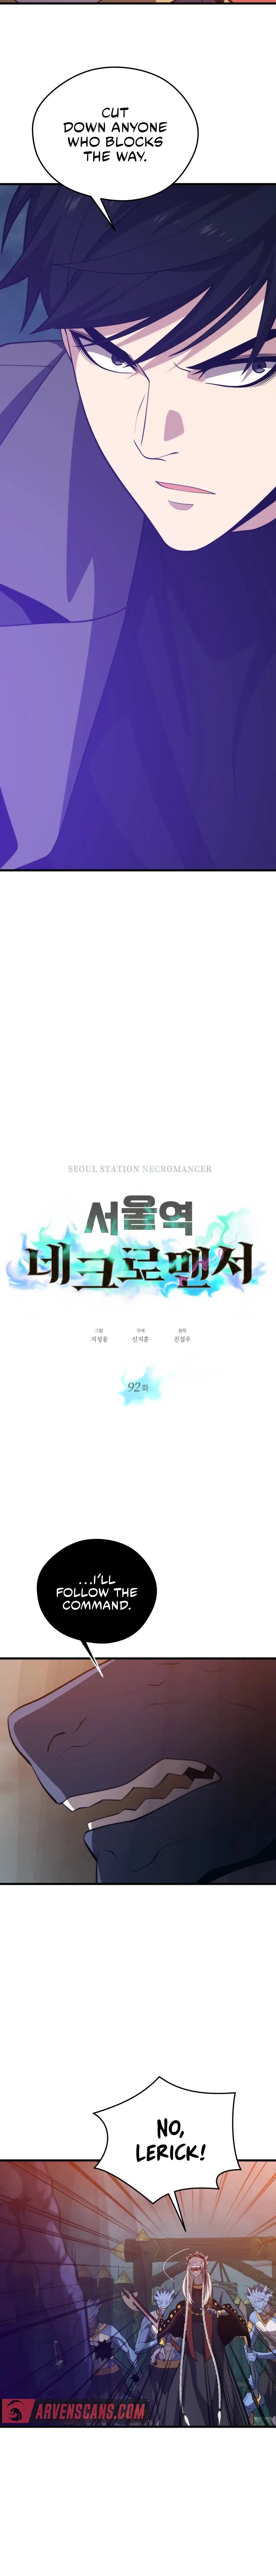 Seoul Station's Necromancer - Page 2